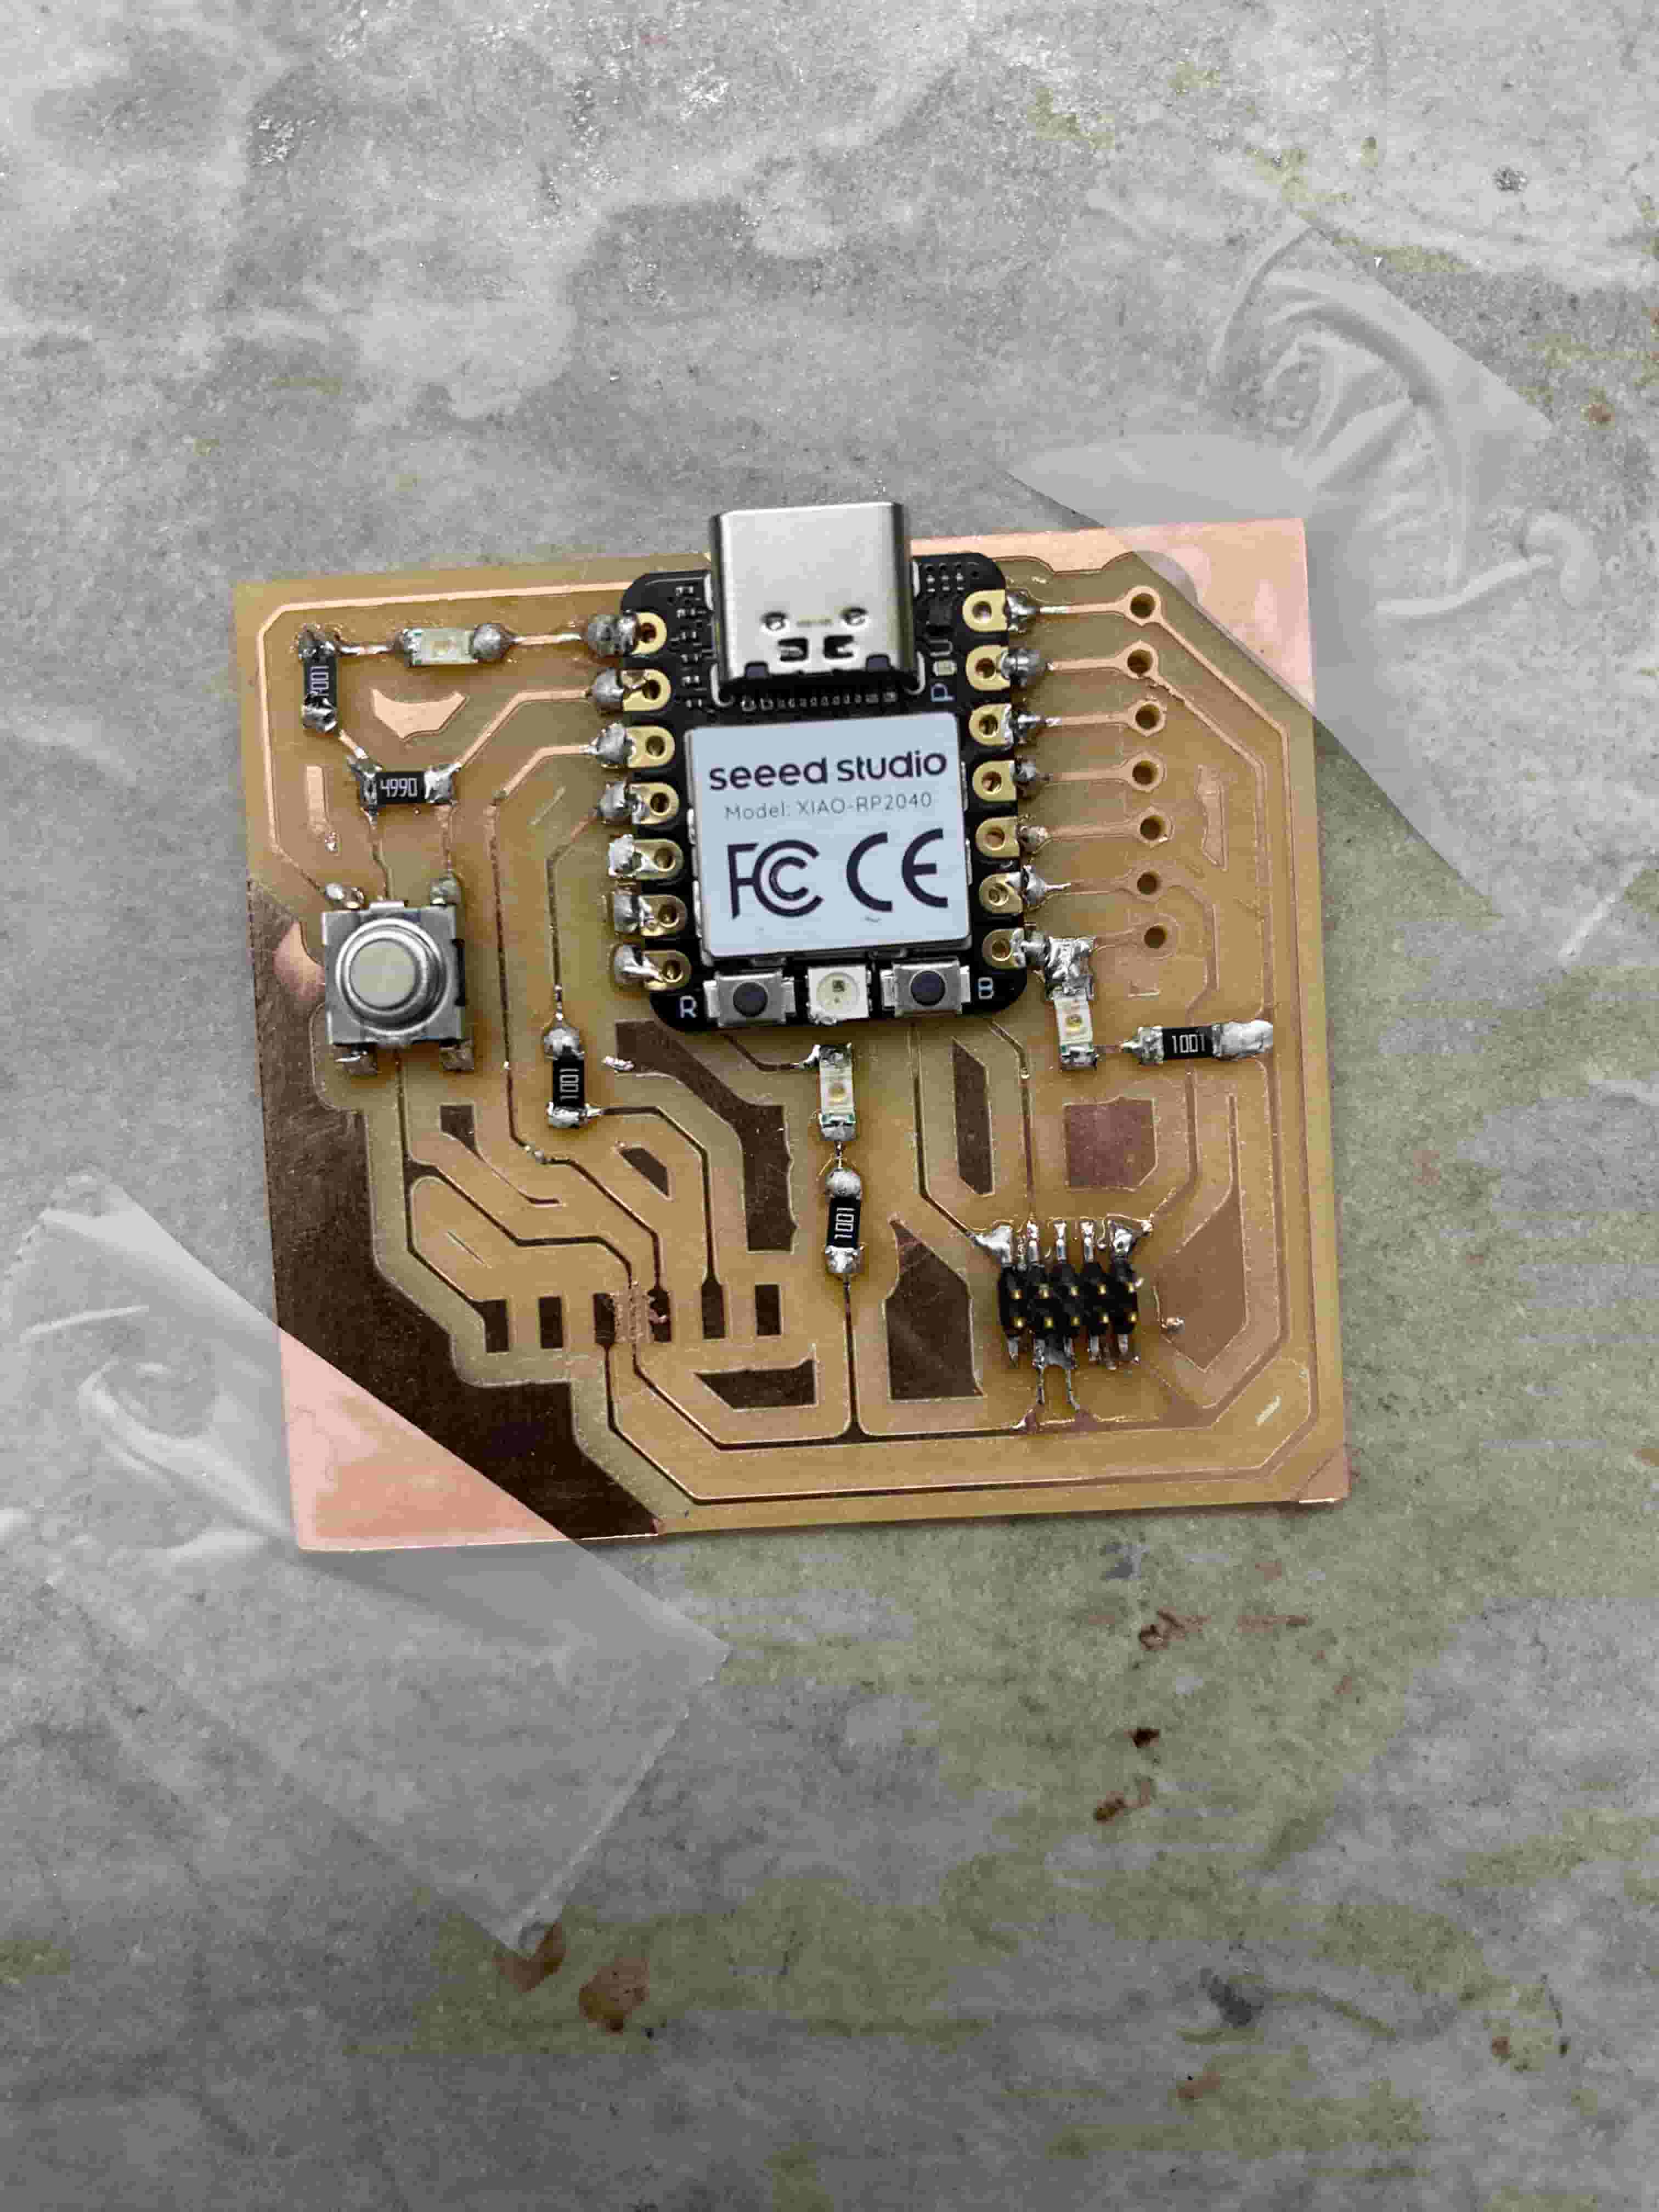 2 1k Ohm Resistors